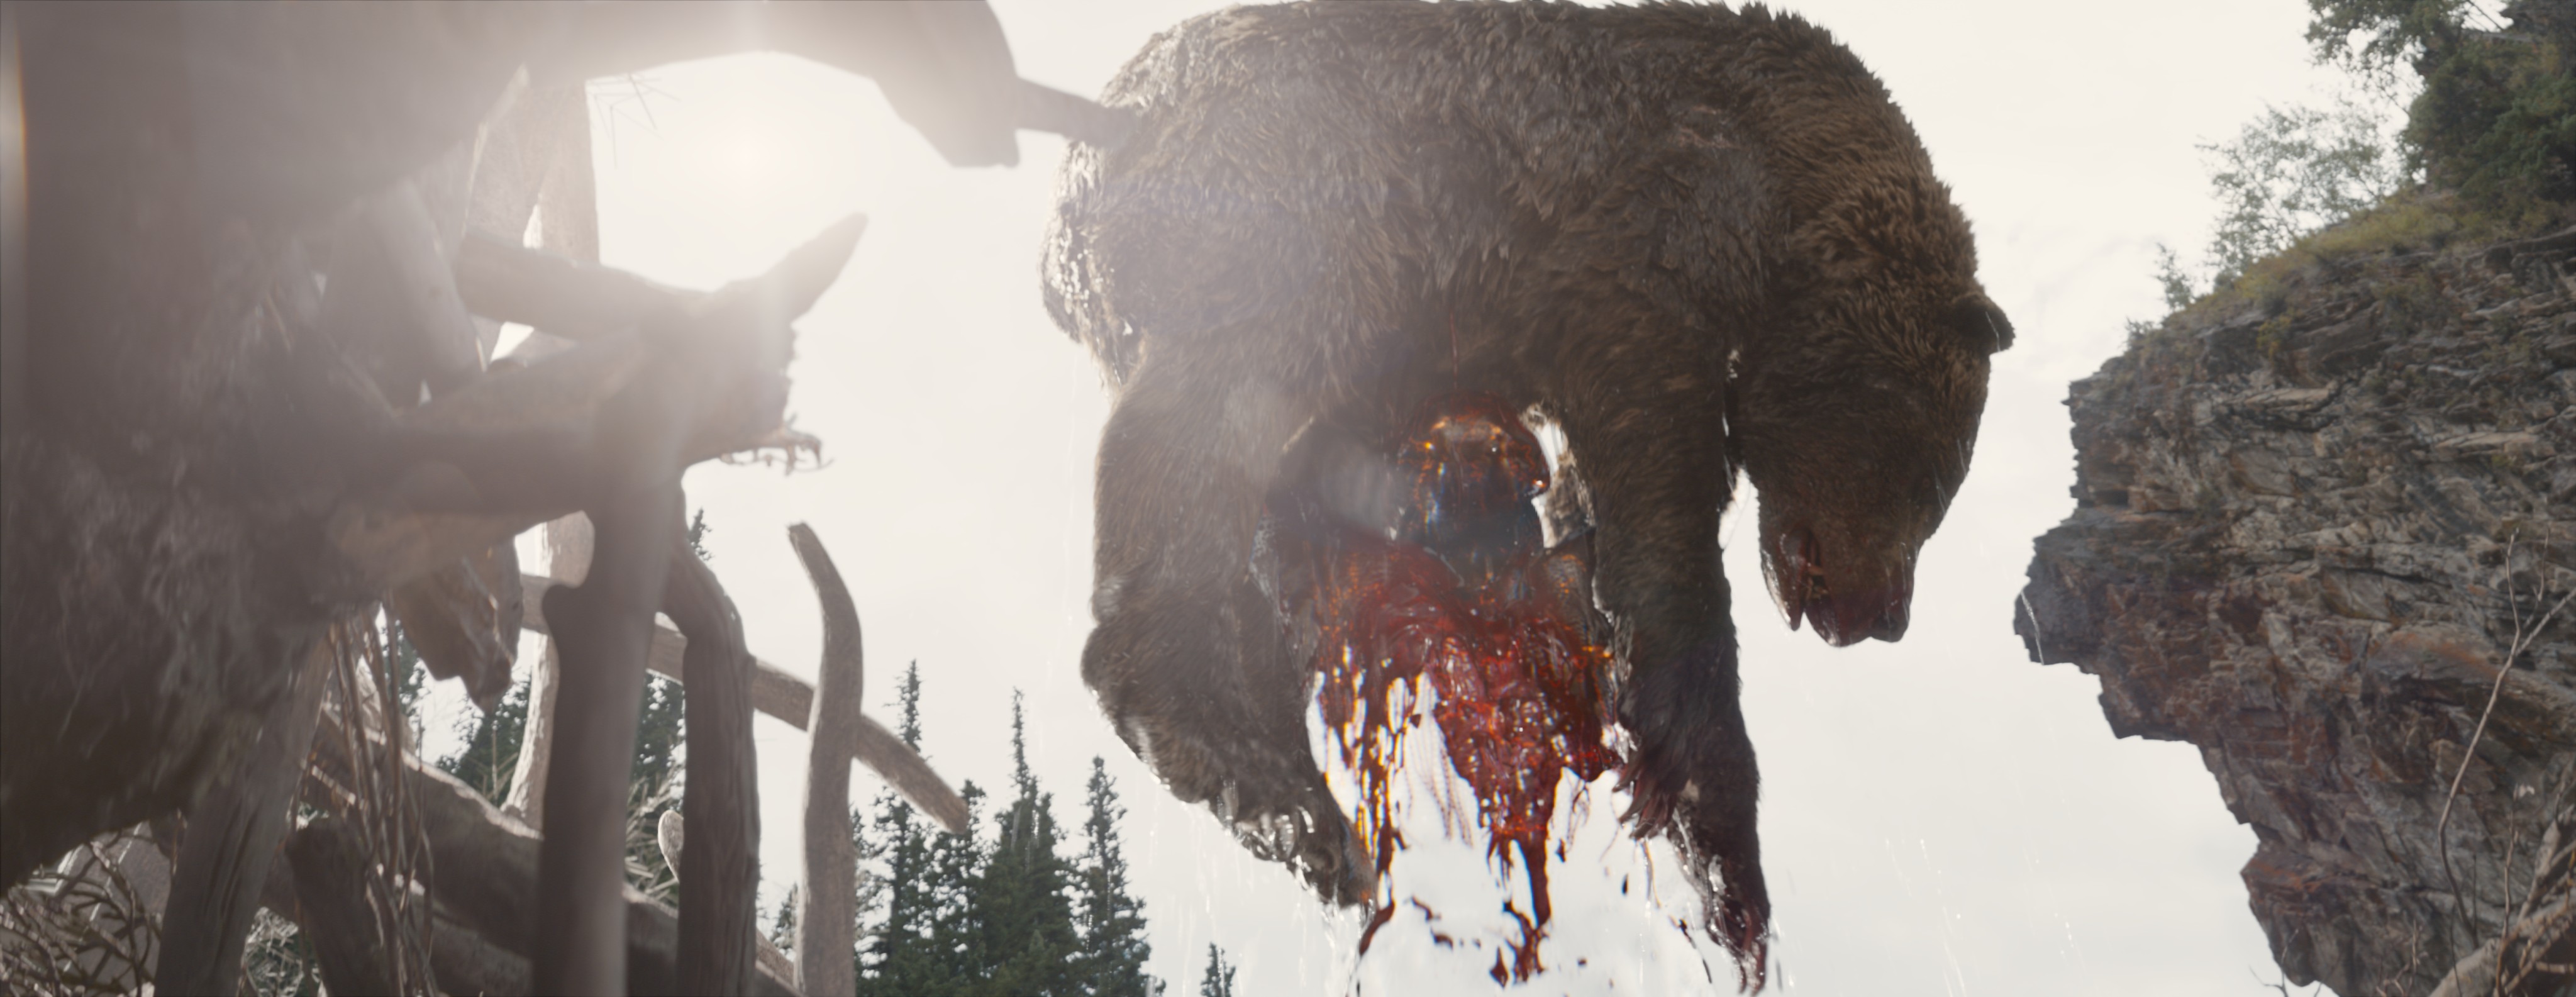 A partially cloaked Predator alien holds a dead bear aloft in a scene from Prey.